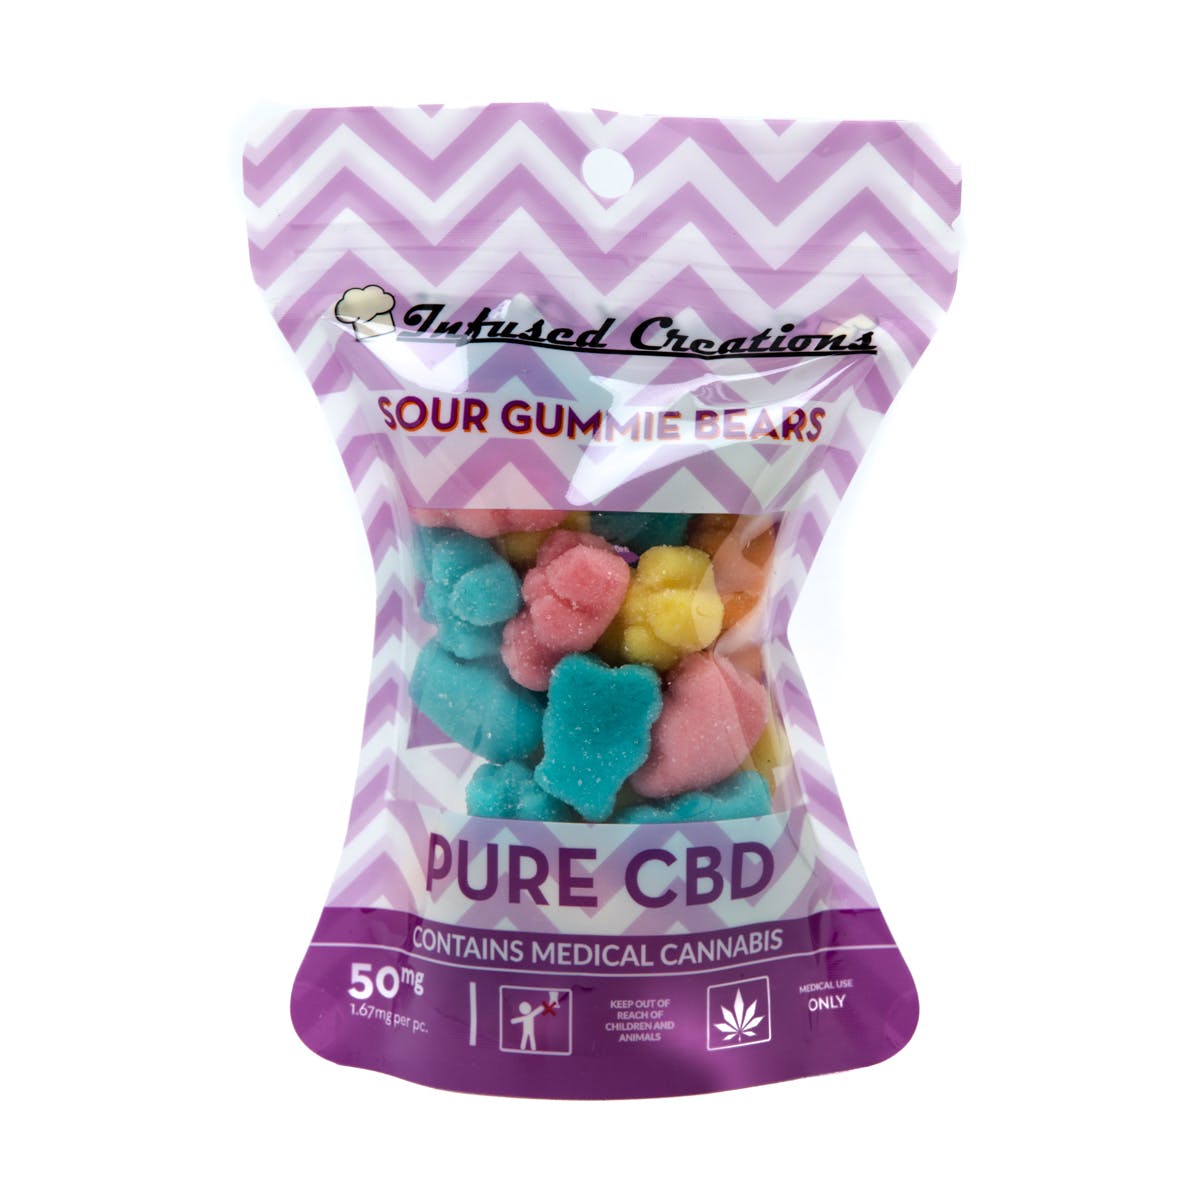 Sour Gummi Bears Pure CBD, 50mg